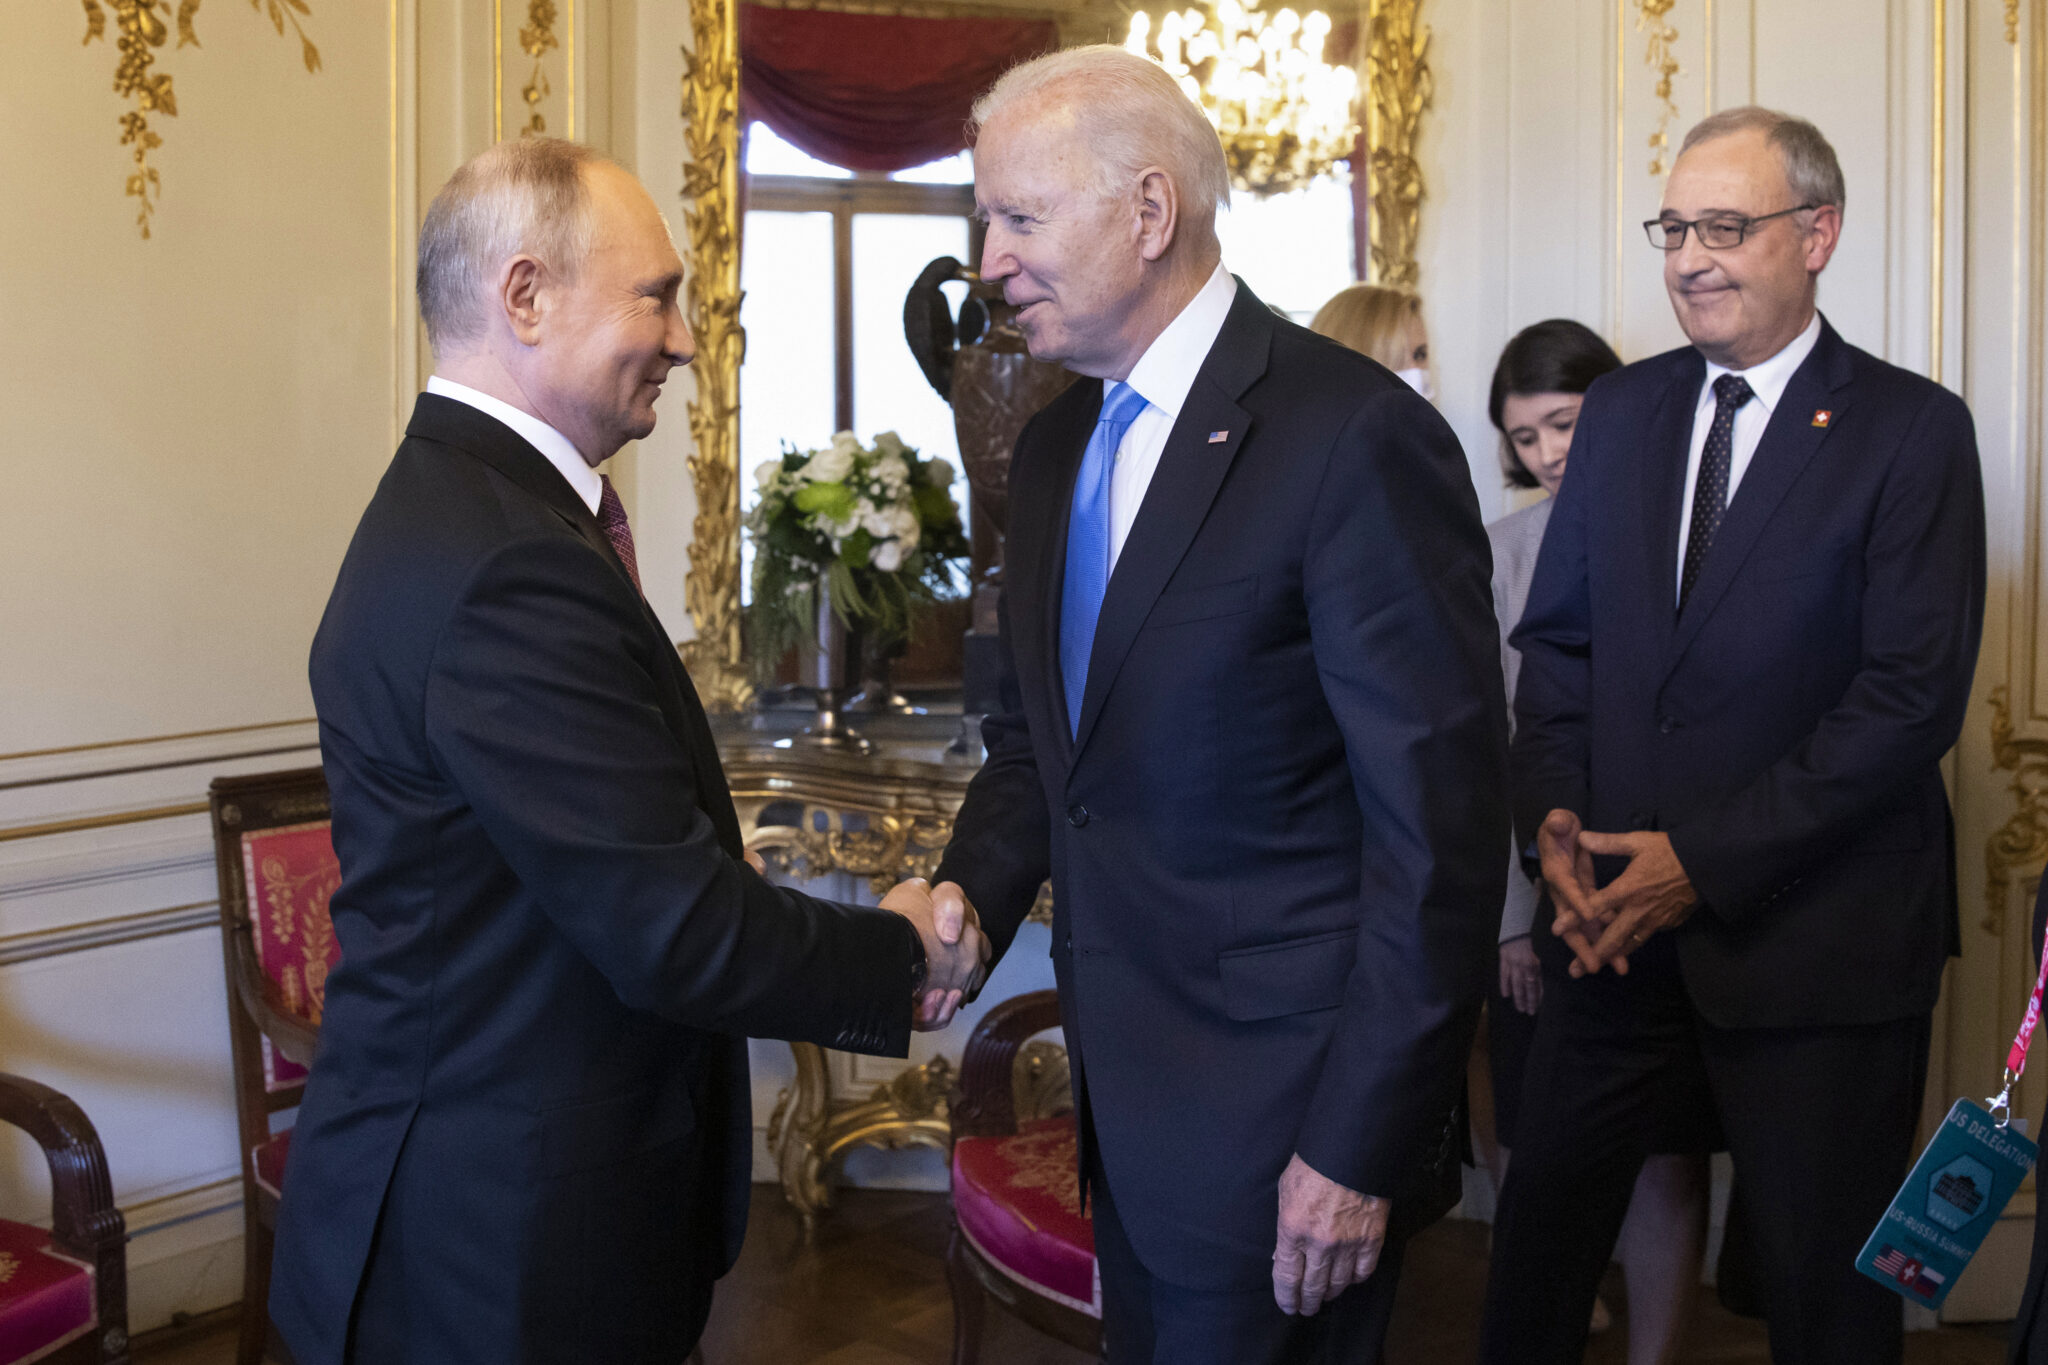 Biden and Putin plan more arms control talks